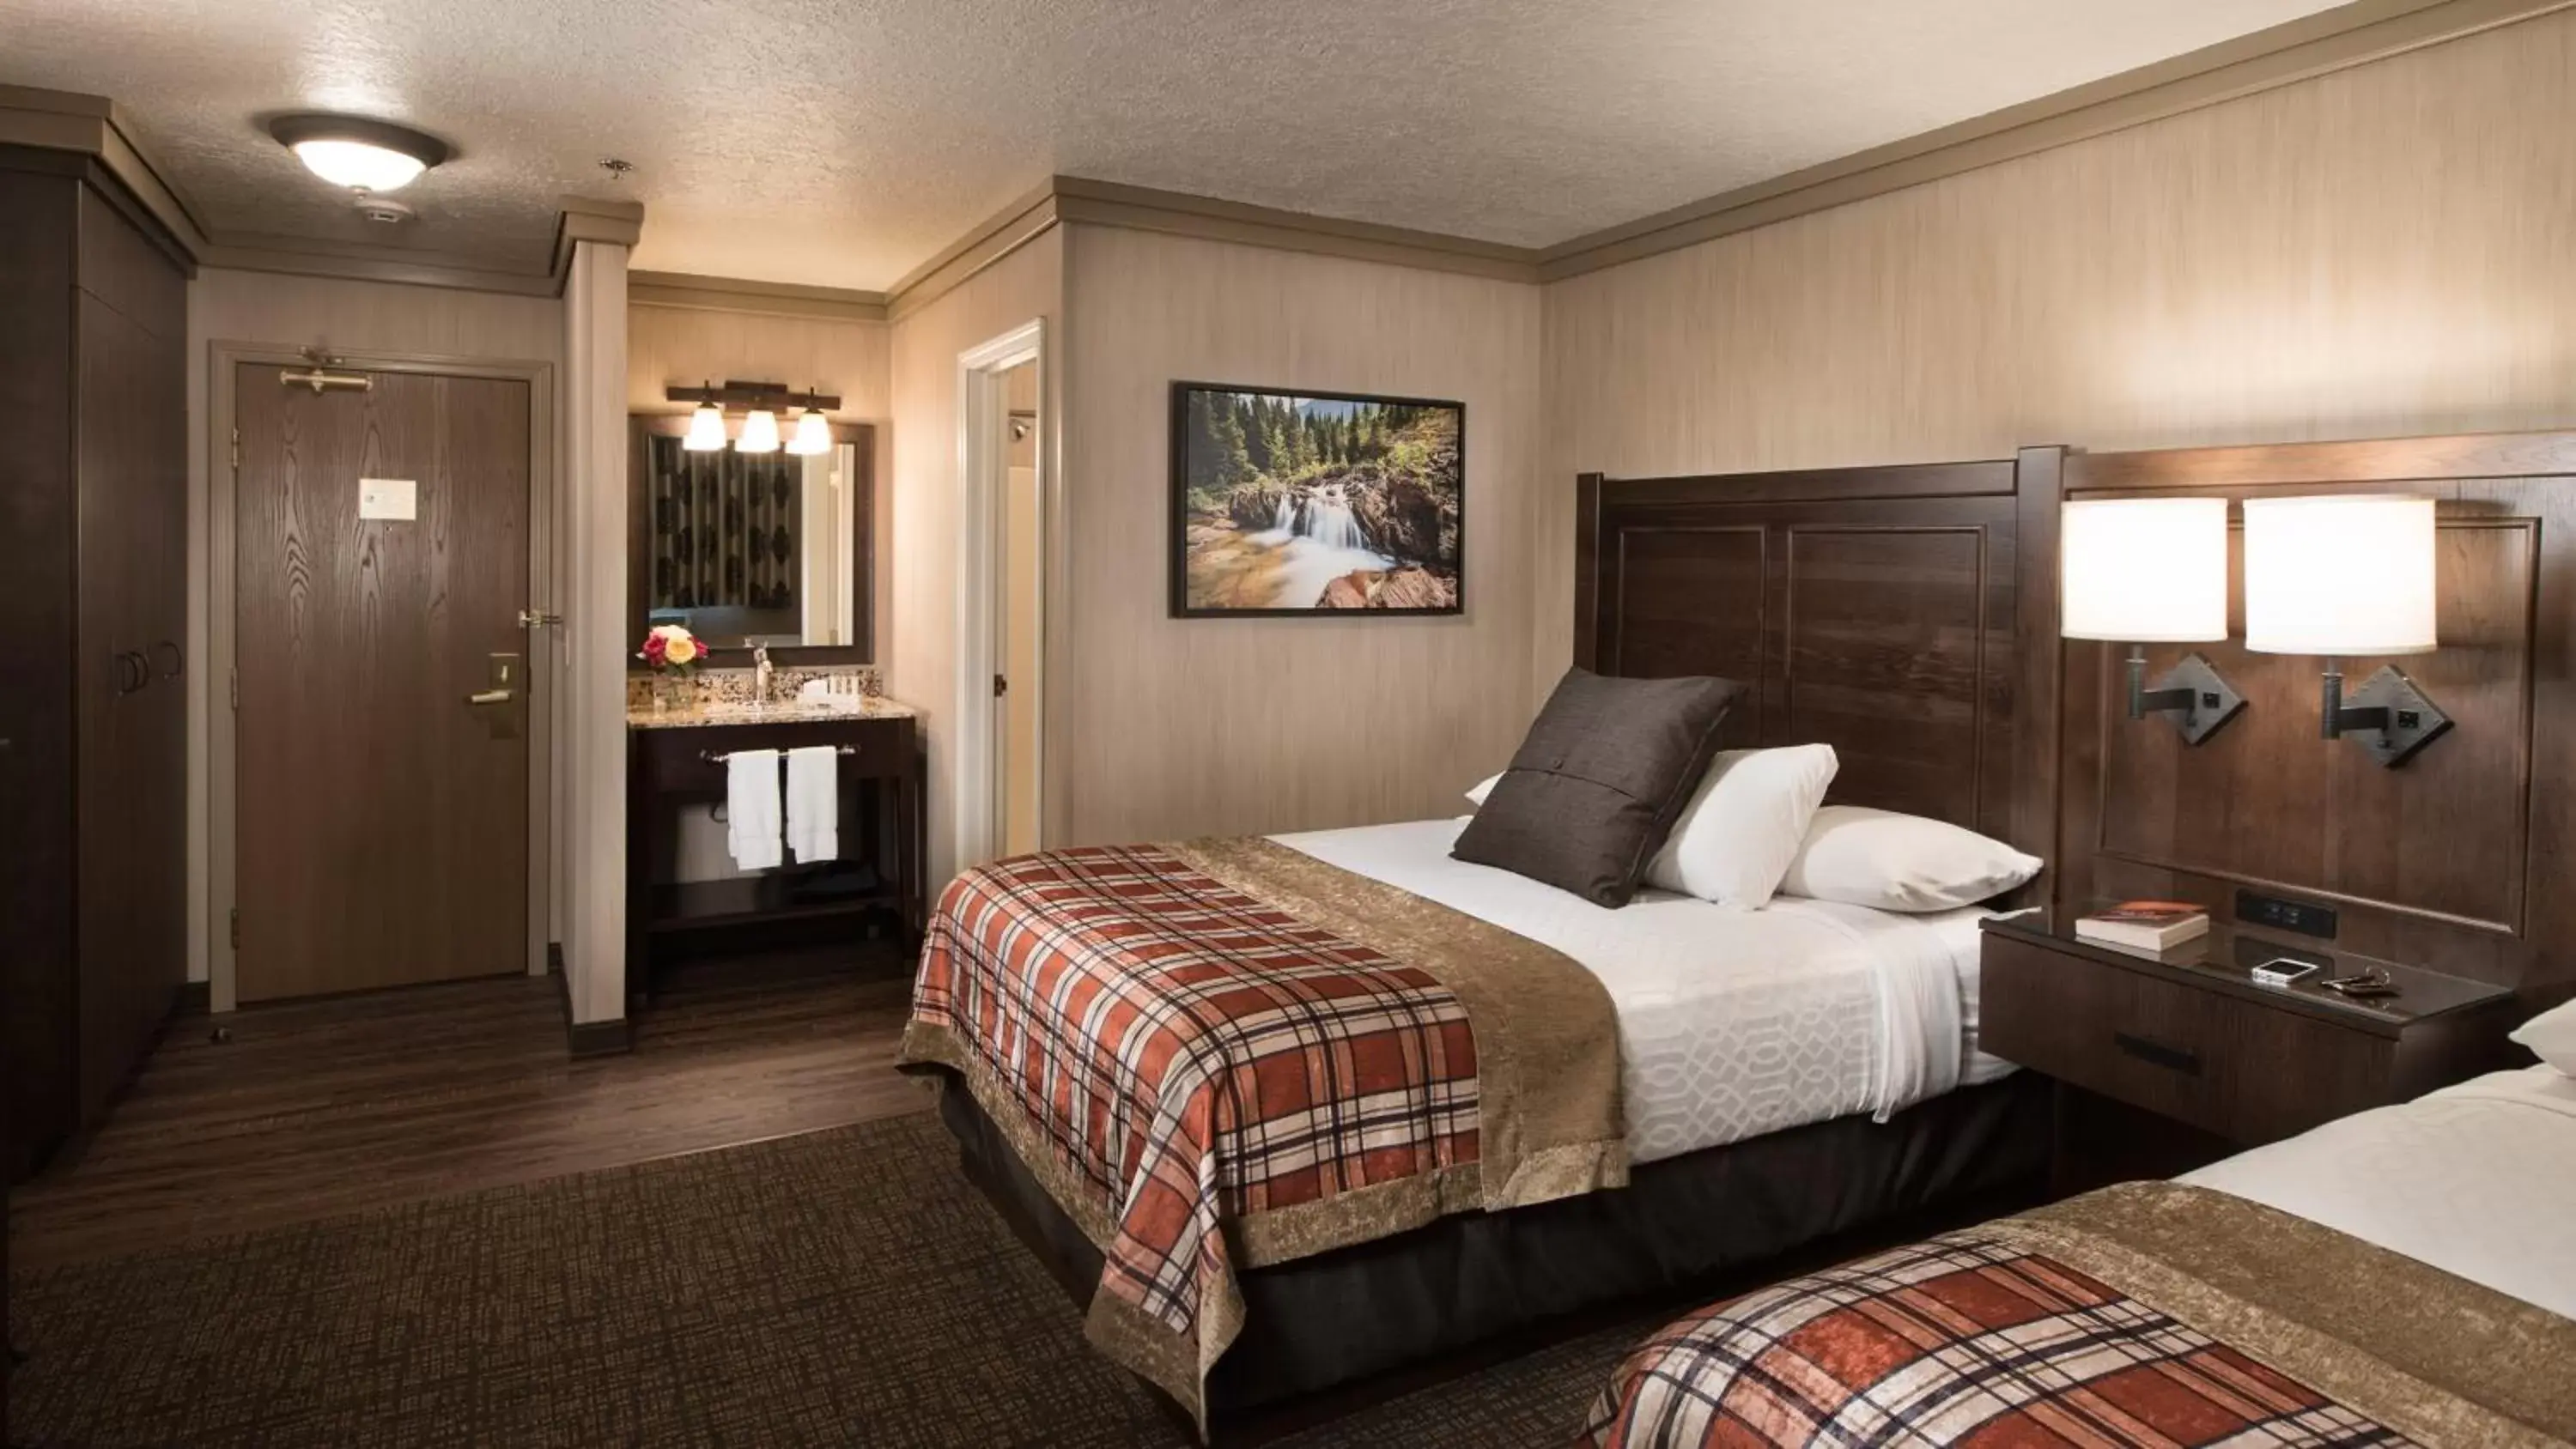 Bed, Room Photo in Best Western Plus Flathead Lake Inn and Suites